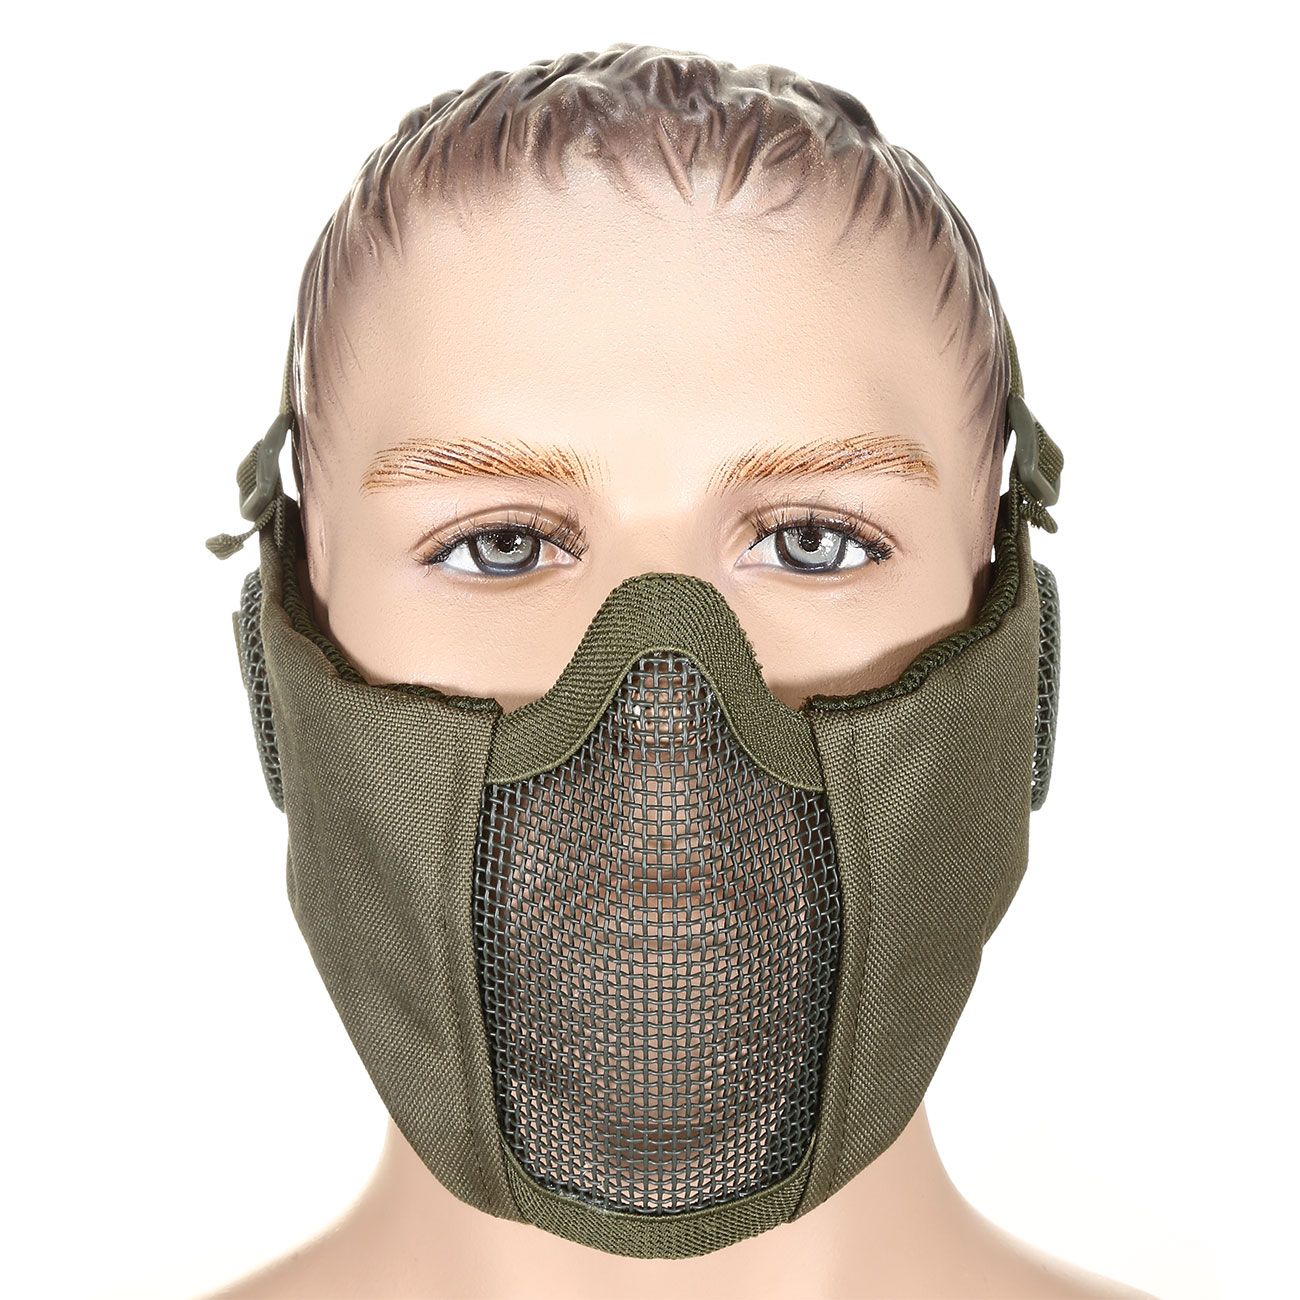 29*19*22cm Airsoft Safety Vollgesichtsmaske Metal Mesh Protective Gesichtsmask 